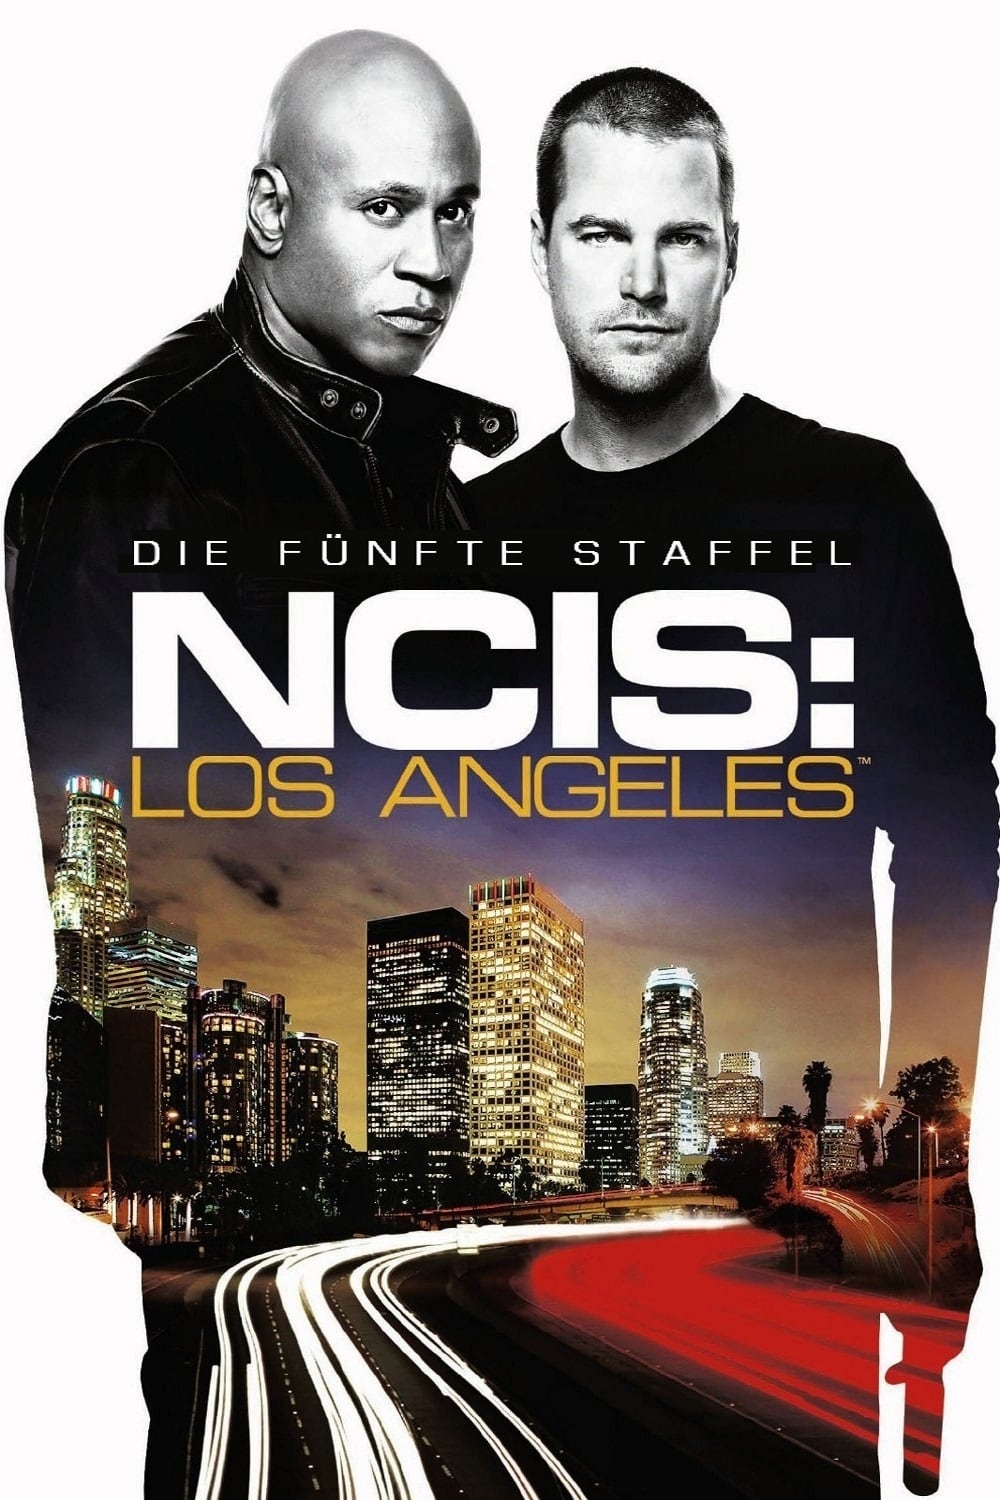 NCIS: Los Angeles Season 5